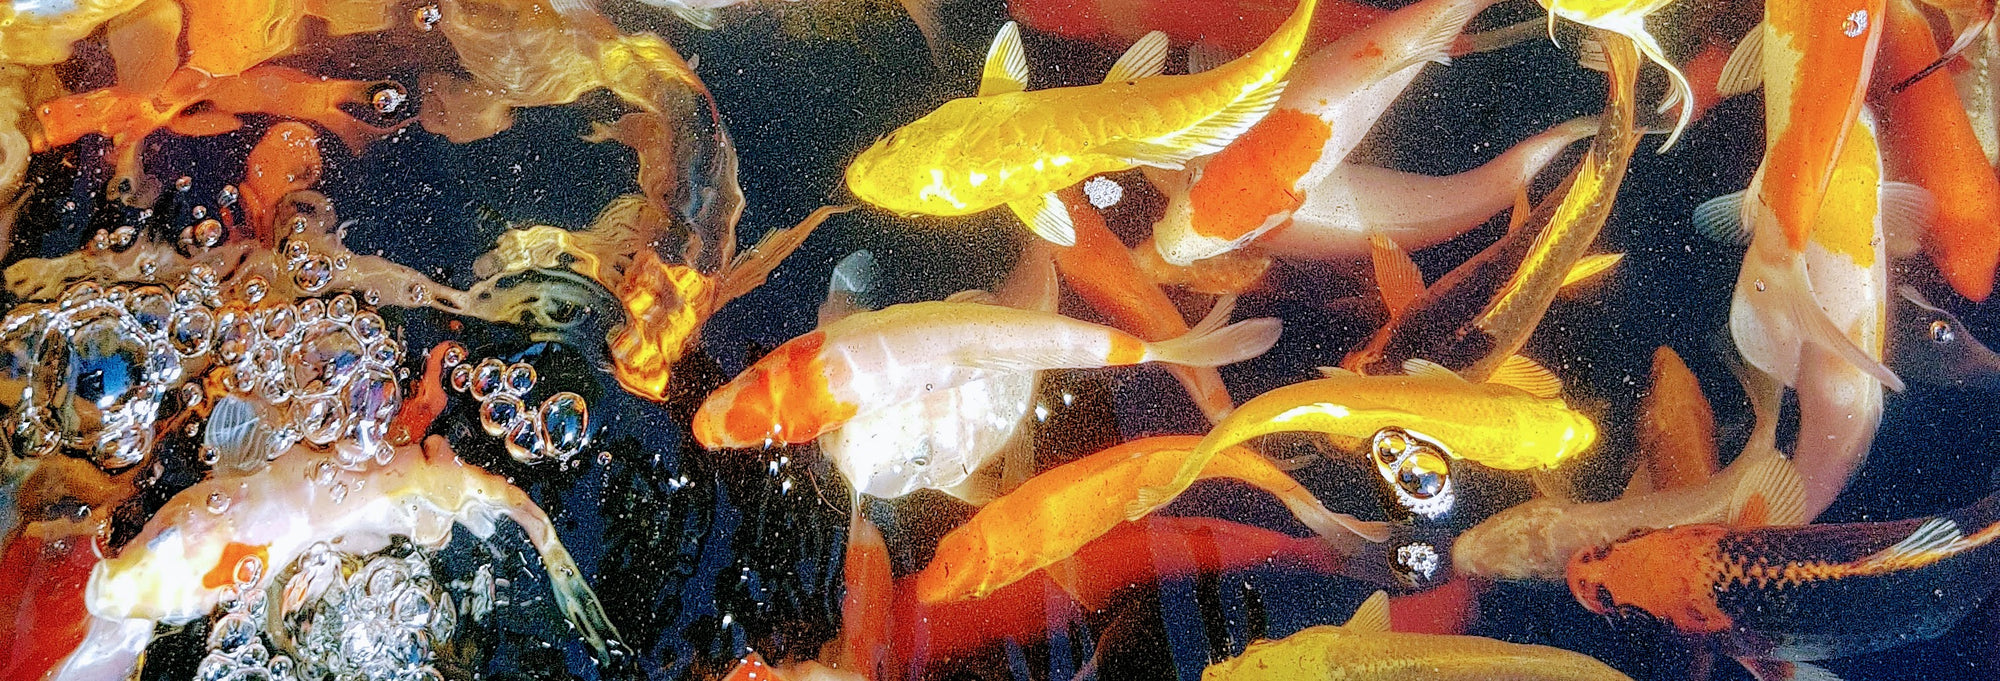 Pond Fish, Koi, Goldfish, Pygmy Perch - Perth Western ...